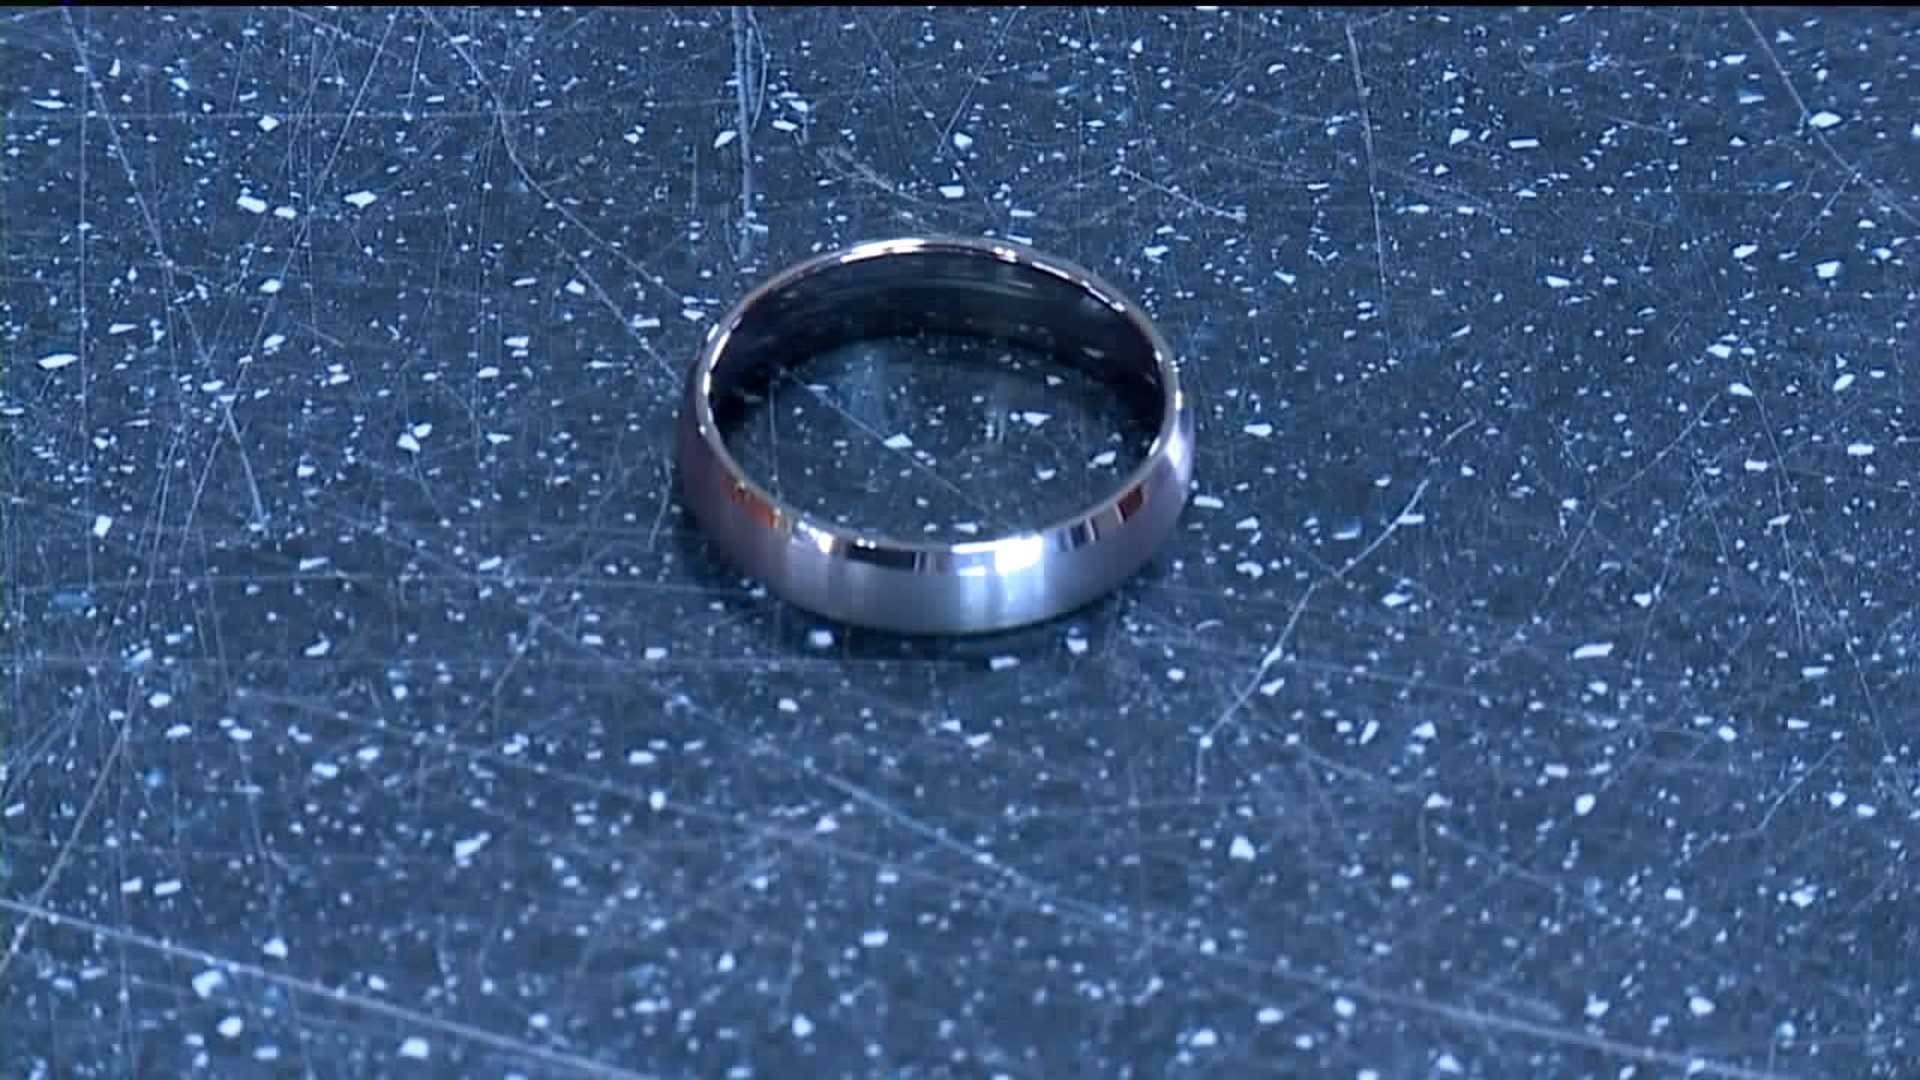 Man's Wedding Ring Found at Klingel's Farm in the Poconos